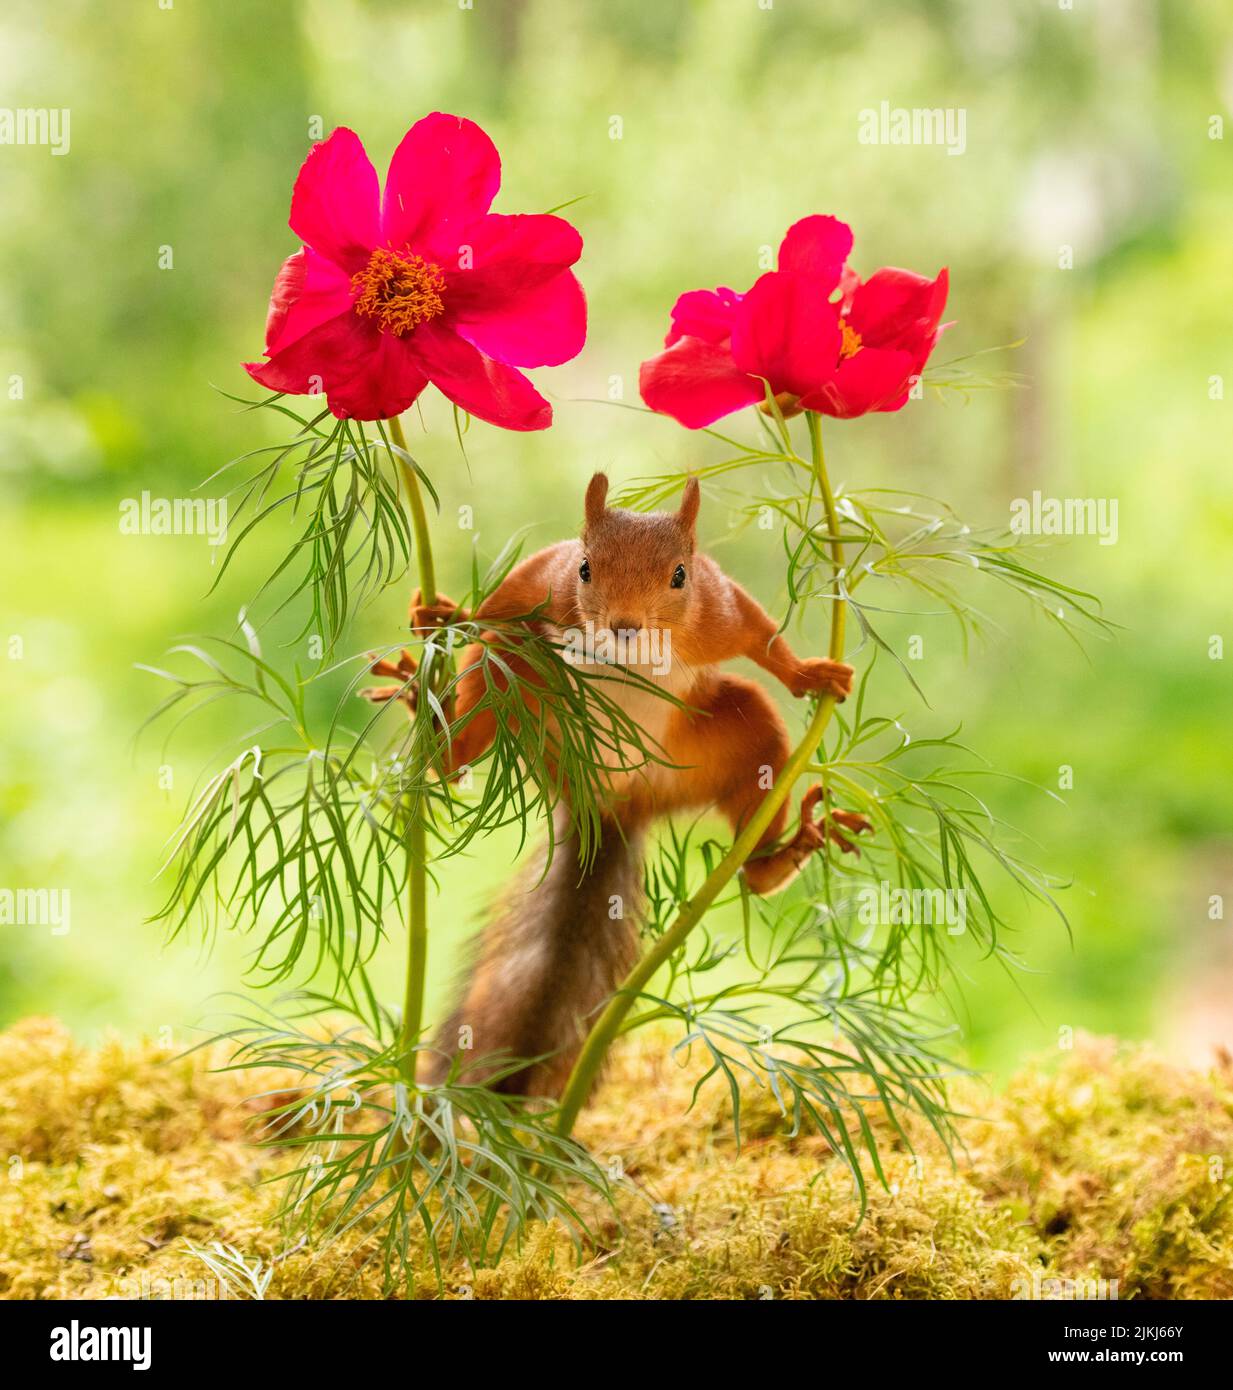 Red Squirrel is standing between red garden cosmos flowers Stock Photo